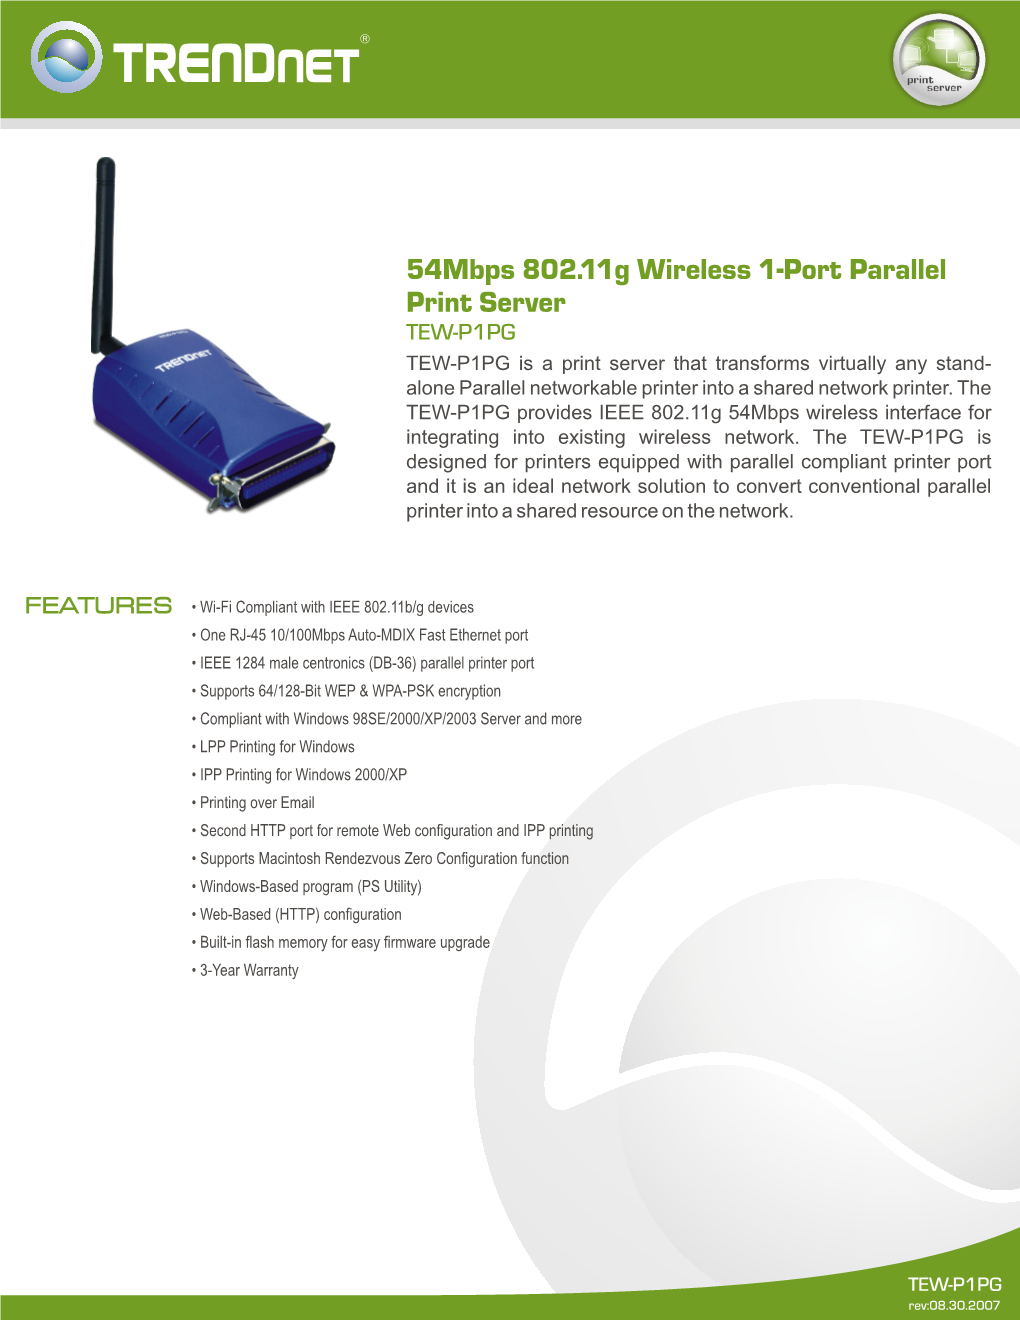 54Mbps 802.11G Wireless 1-Port Parallel Print Server